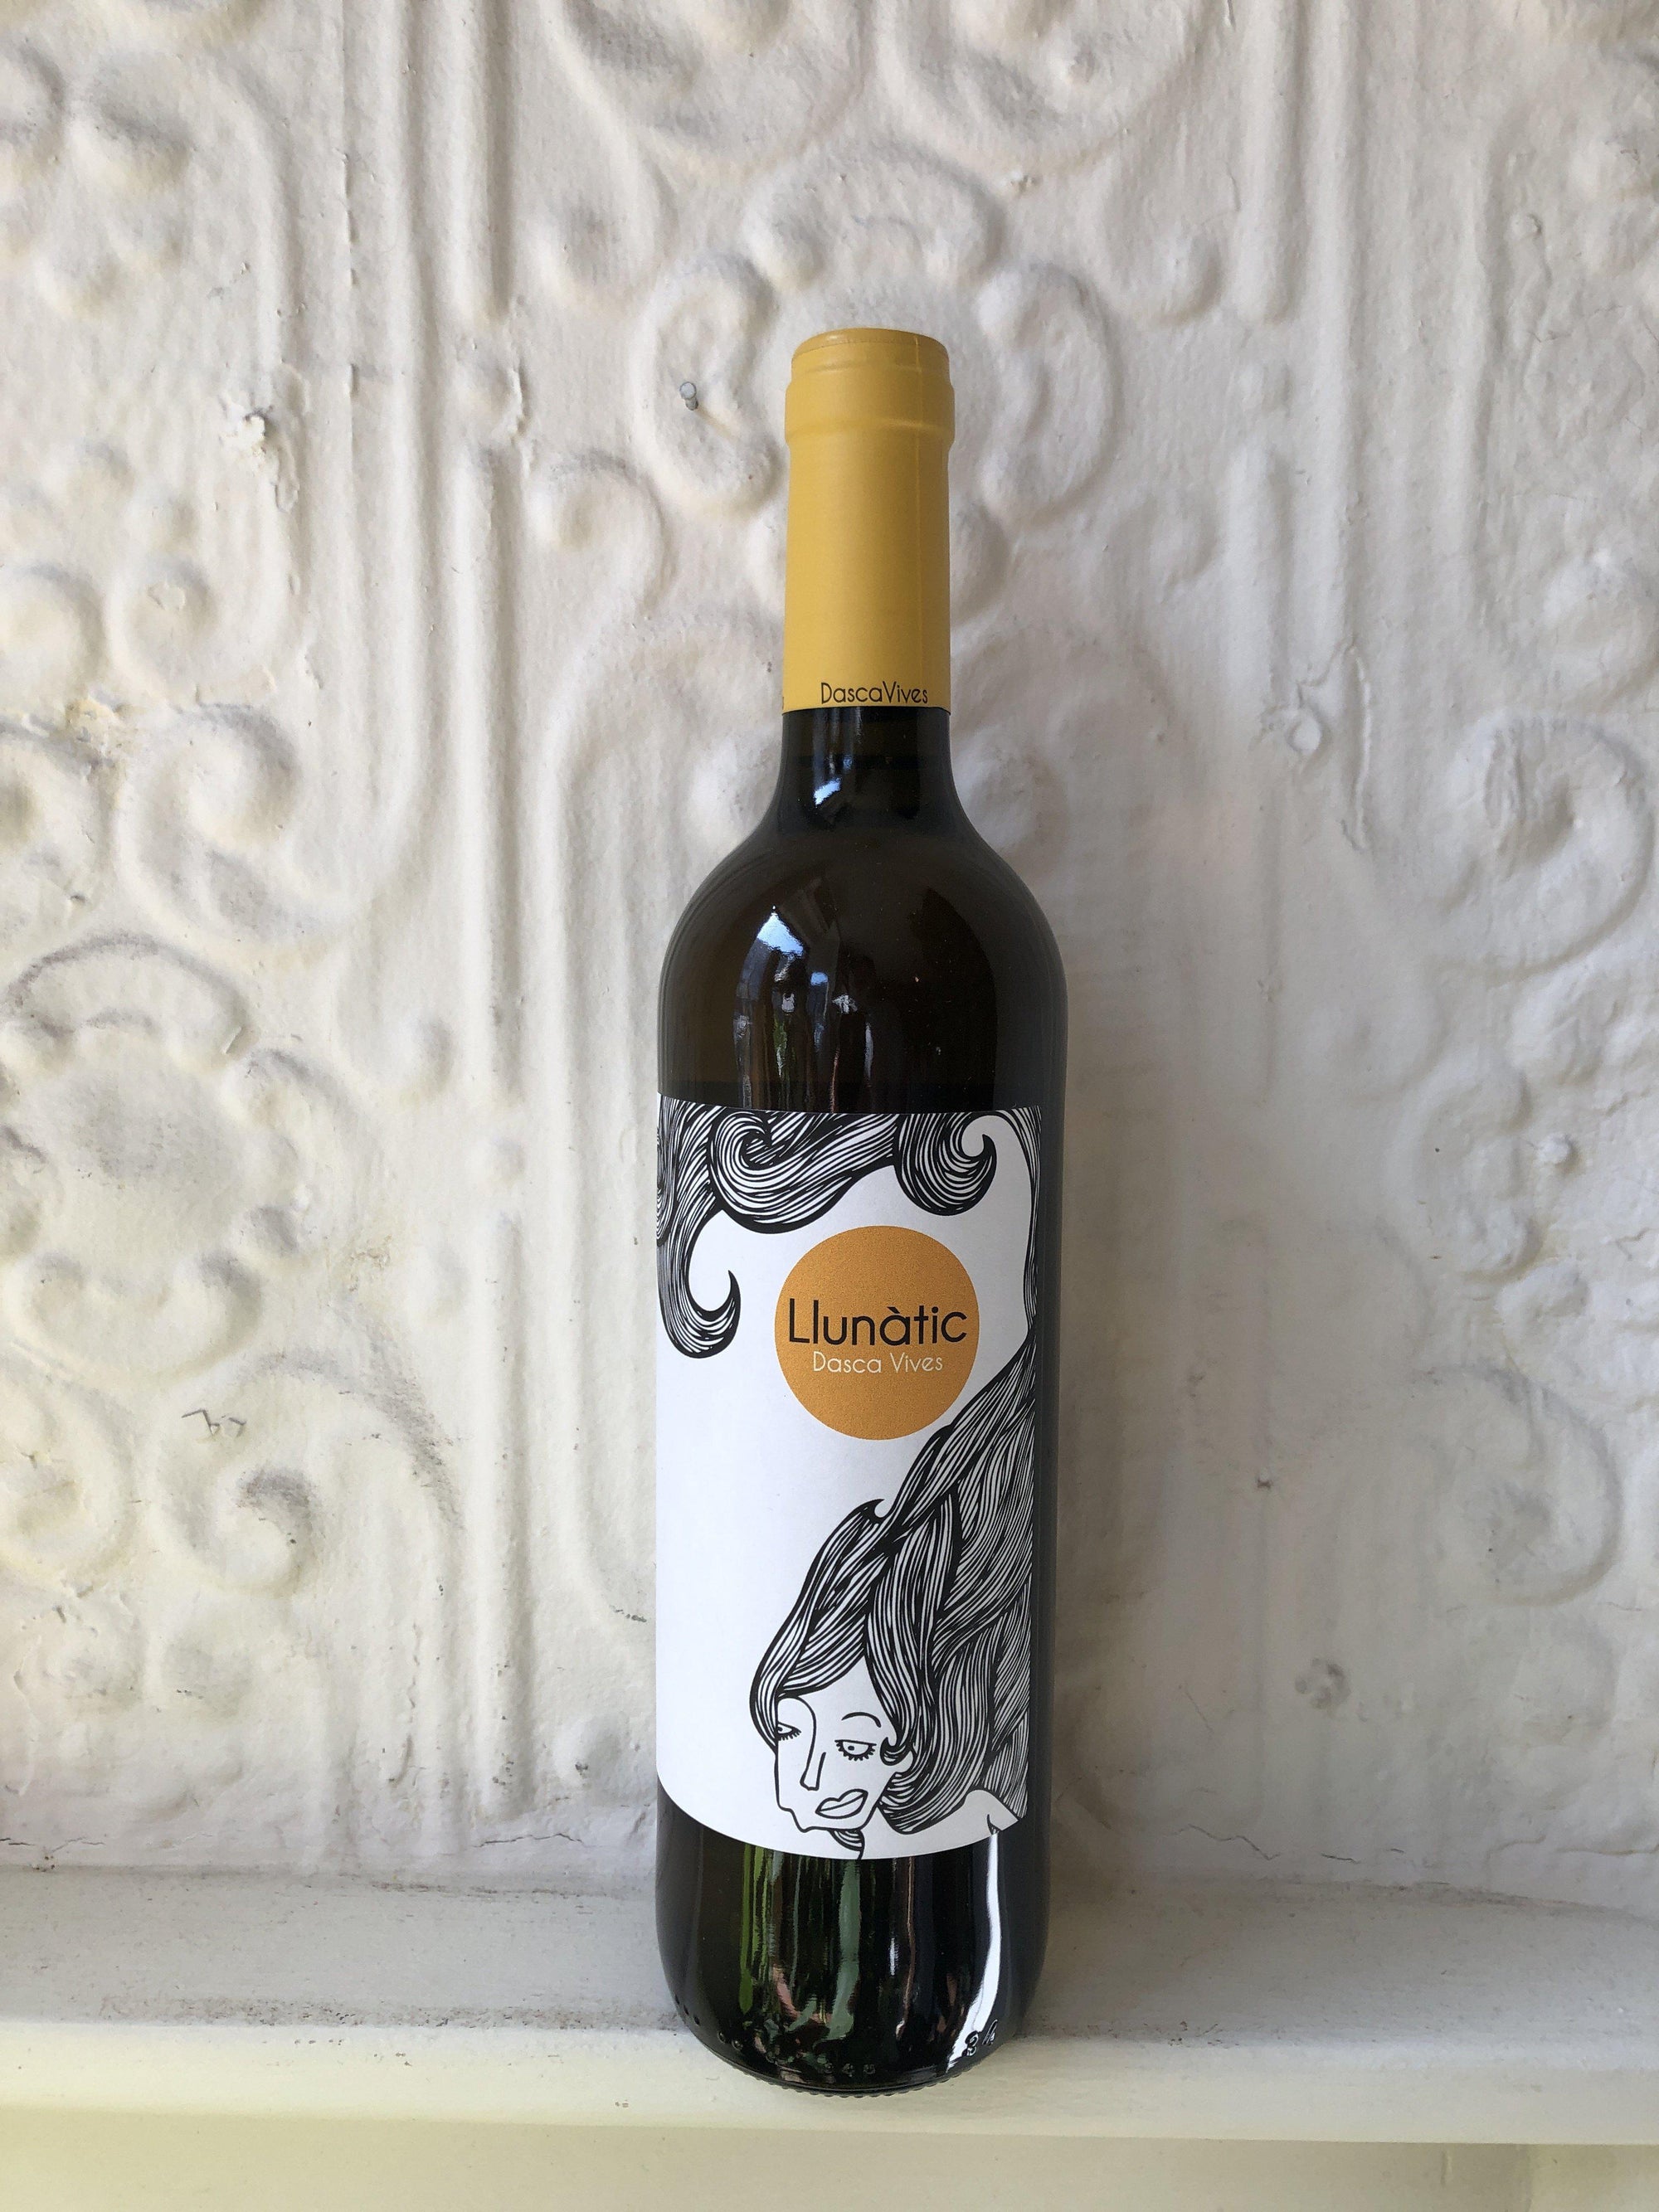 Llunatic, Dasca Vives 2018 (Catalonia, Spain)-Wine-Bibber & Bell